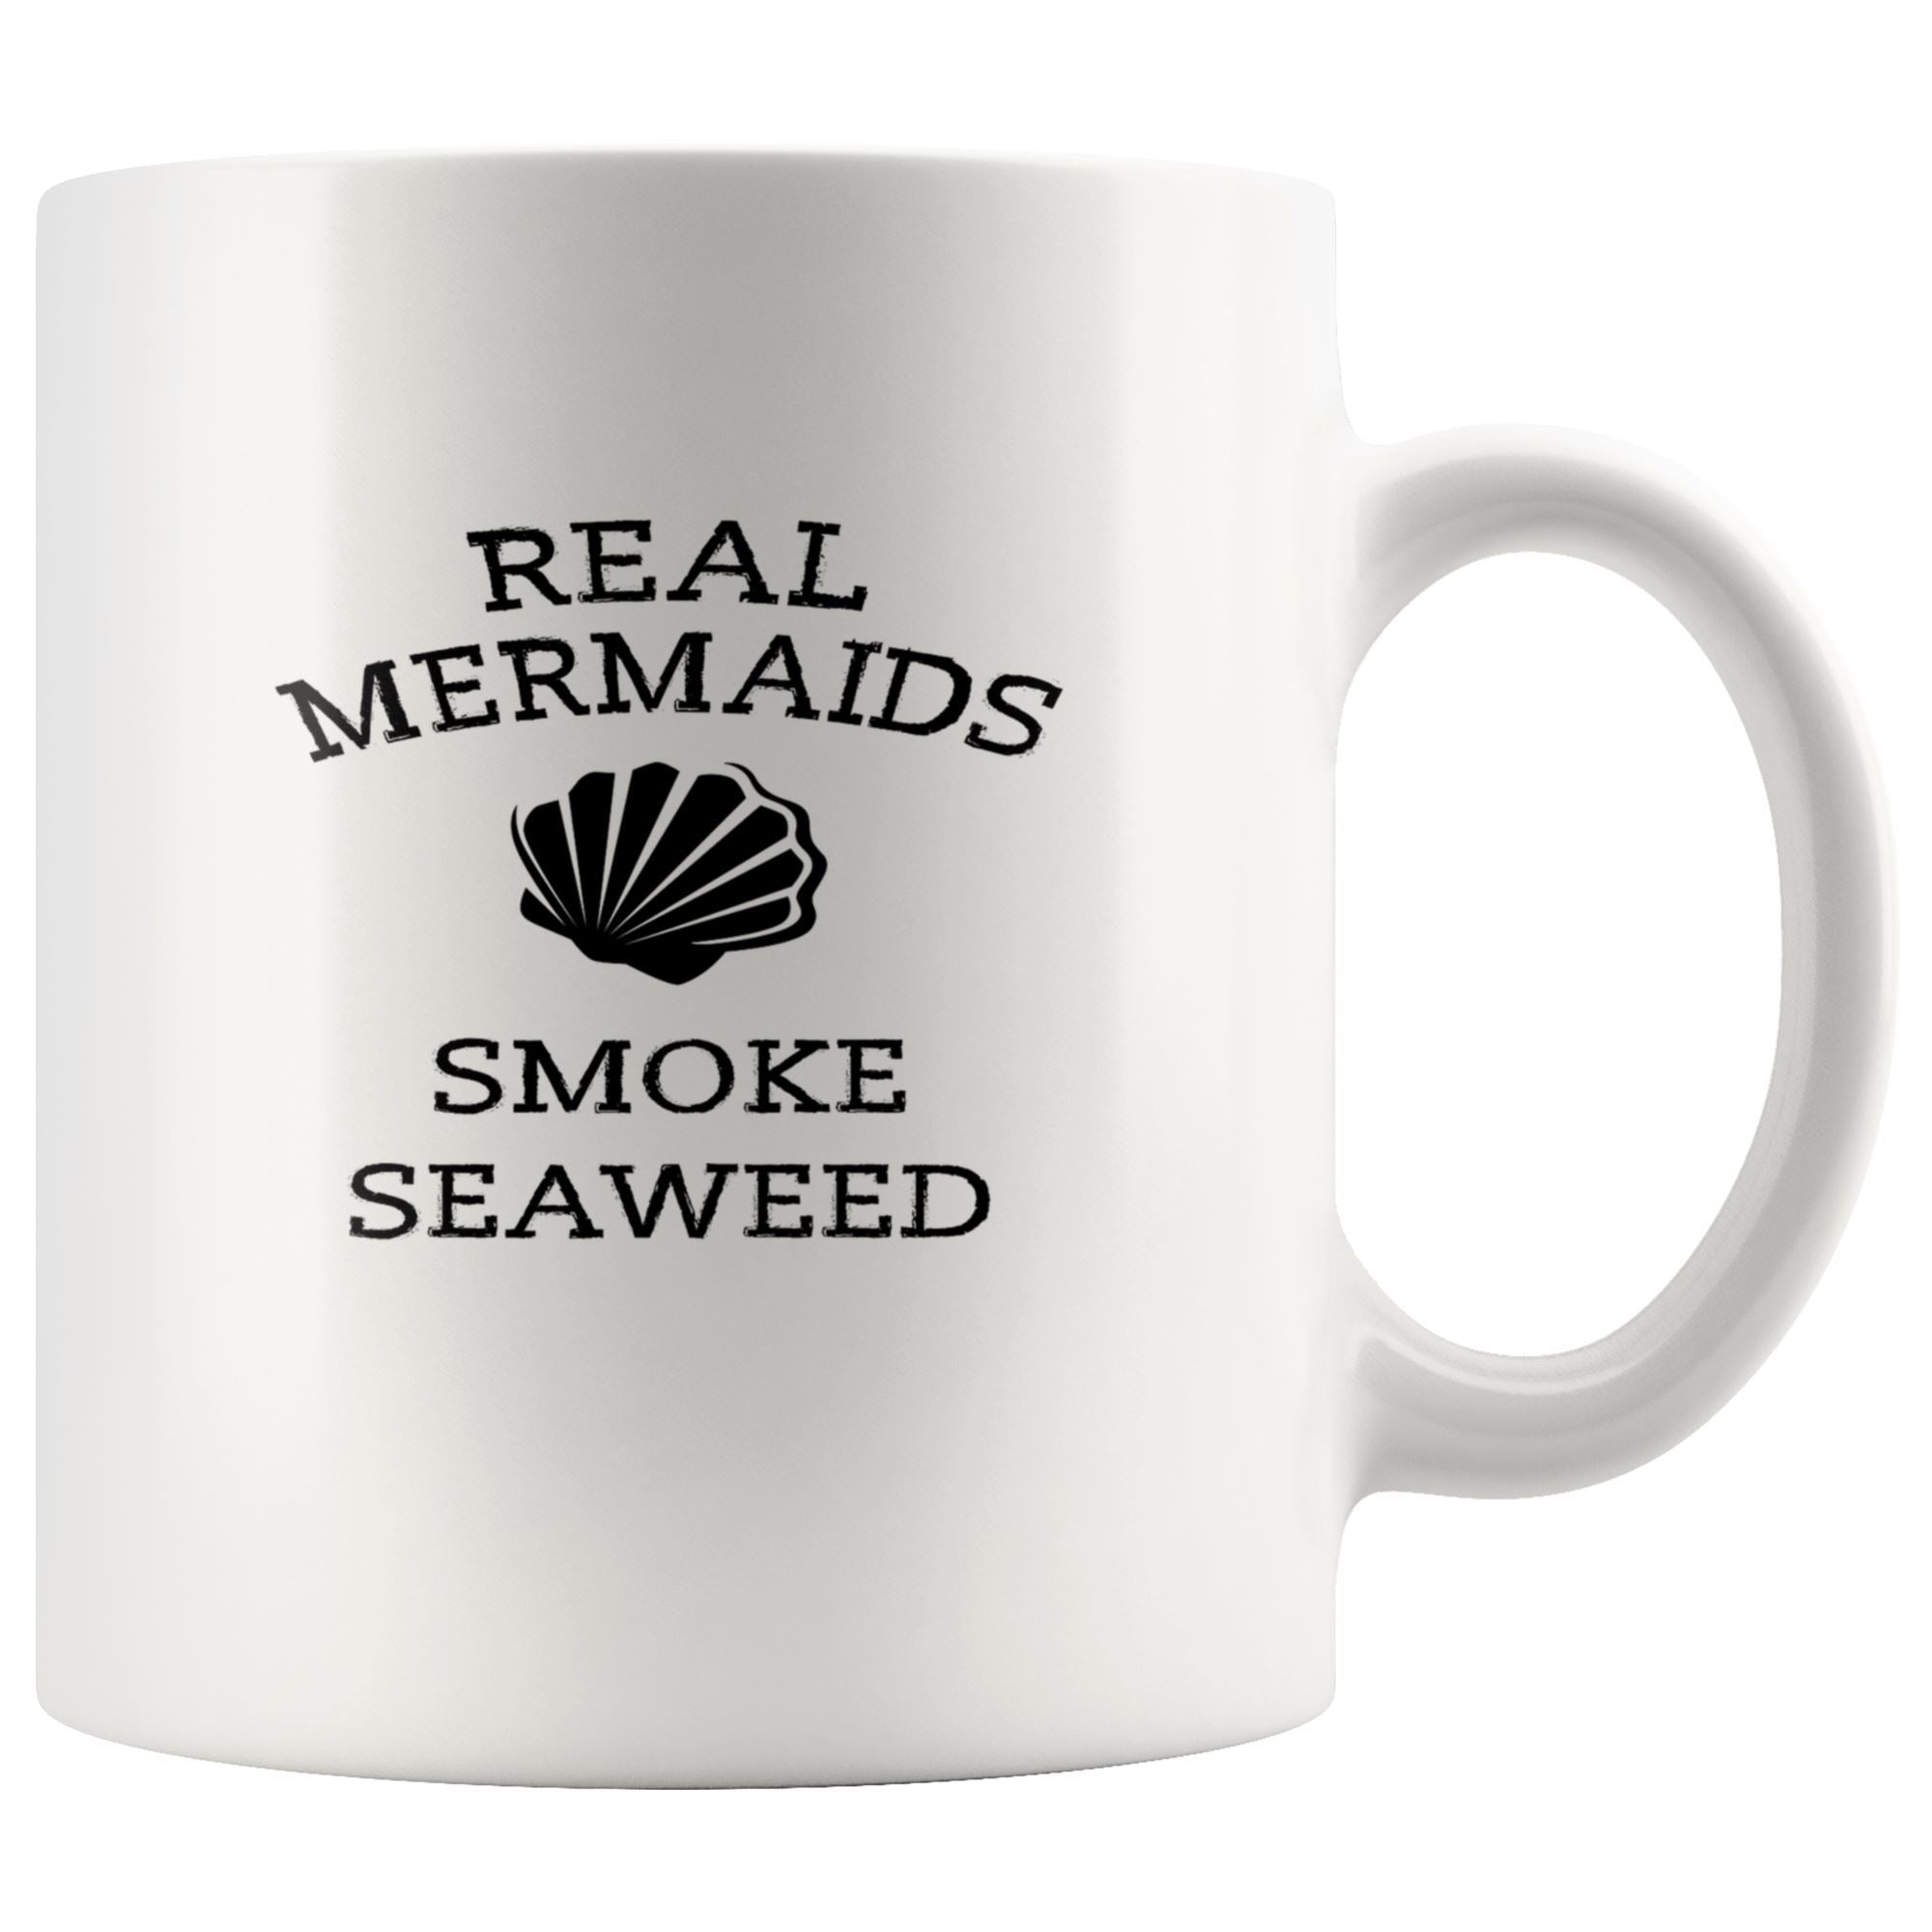 Real Mermaids smoke Seaweed Drinkware teelaunch 11oz Mug 